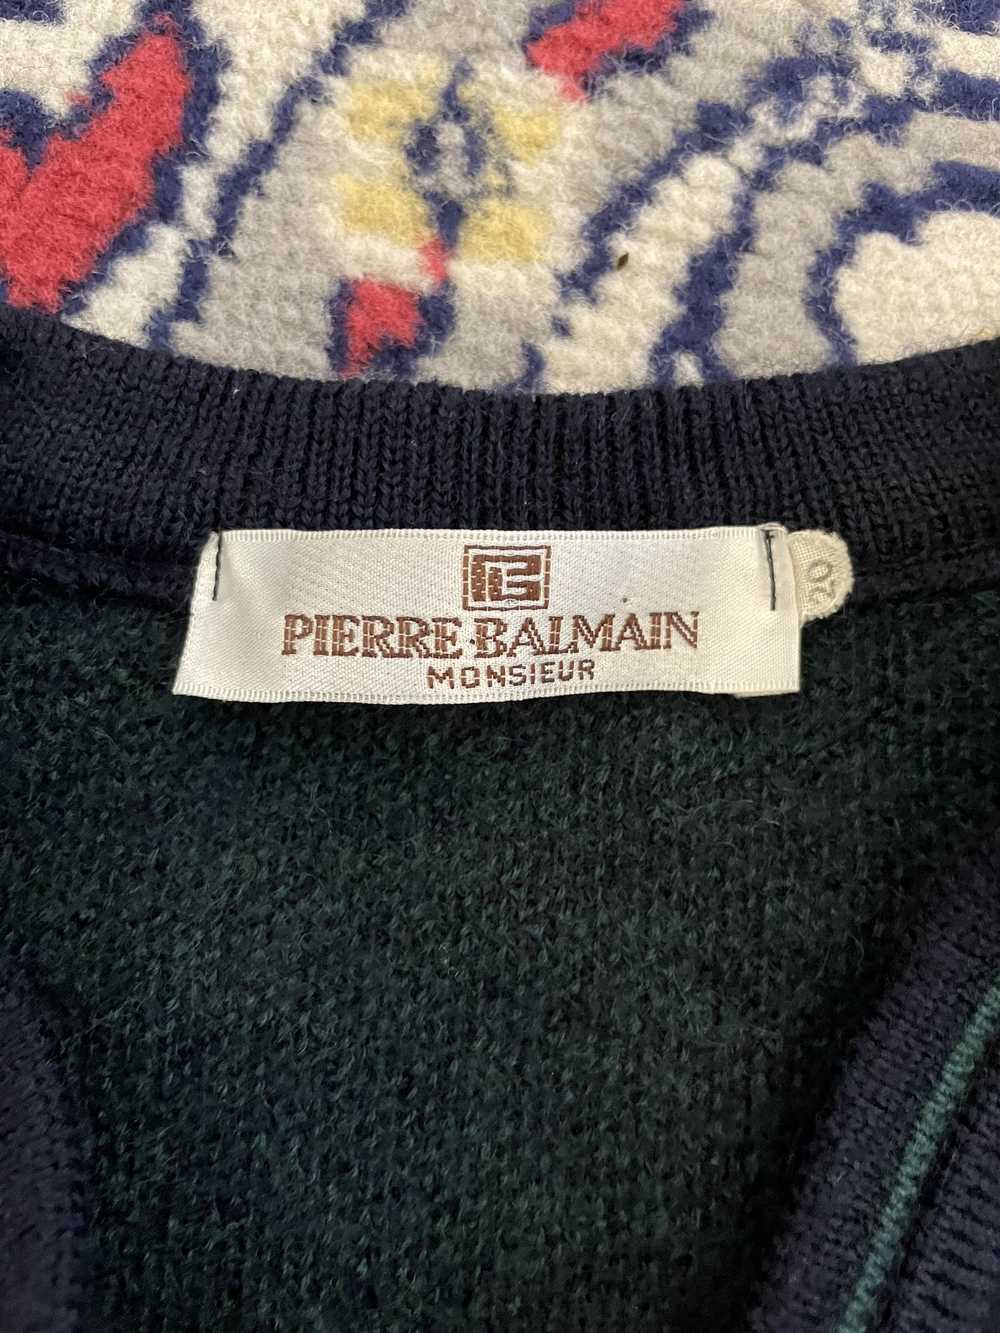 Pierre Balmain Balmain Sweater - image 2